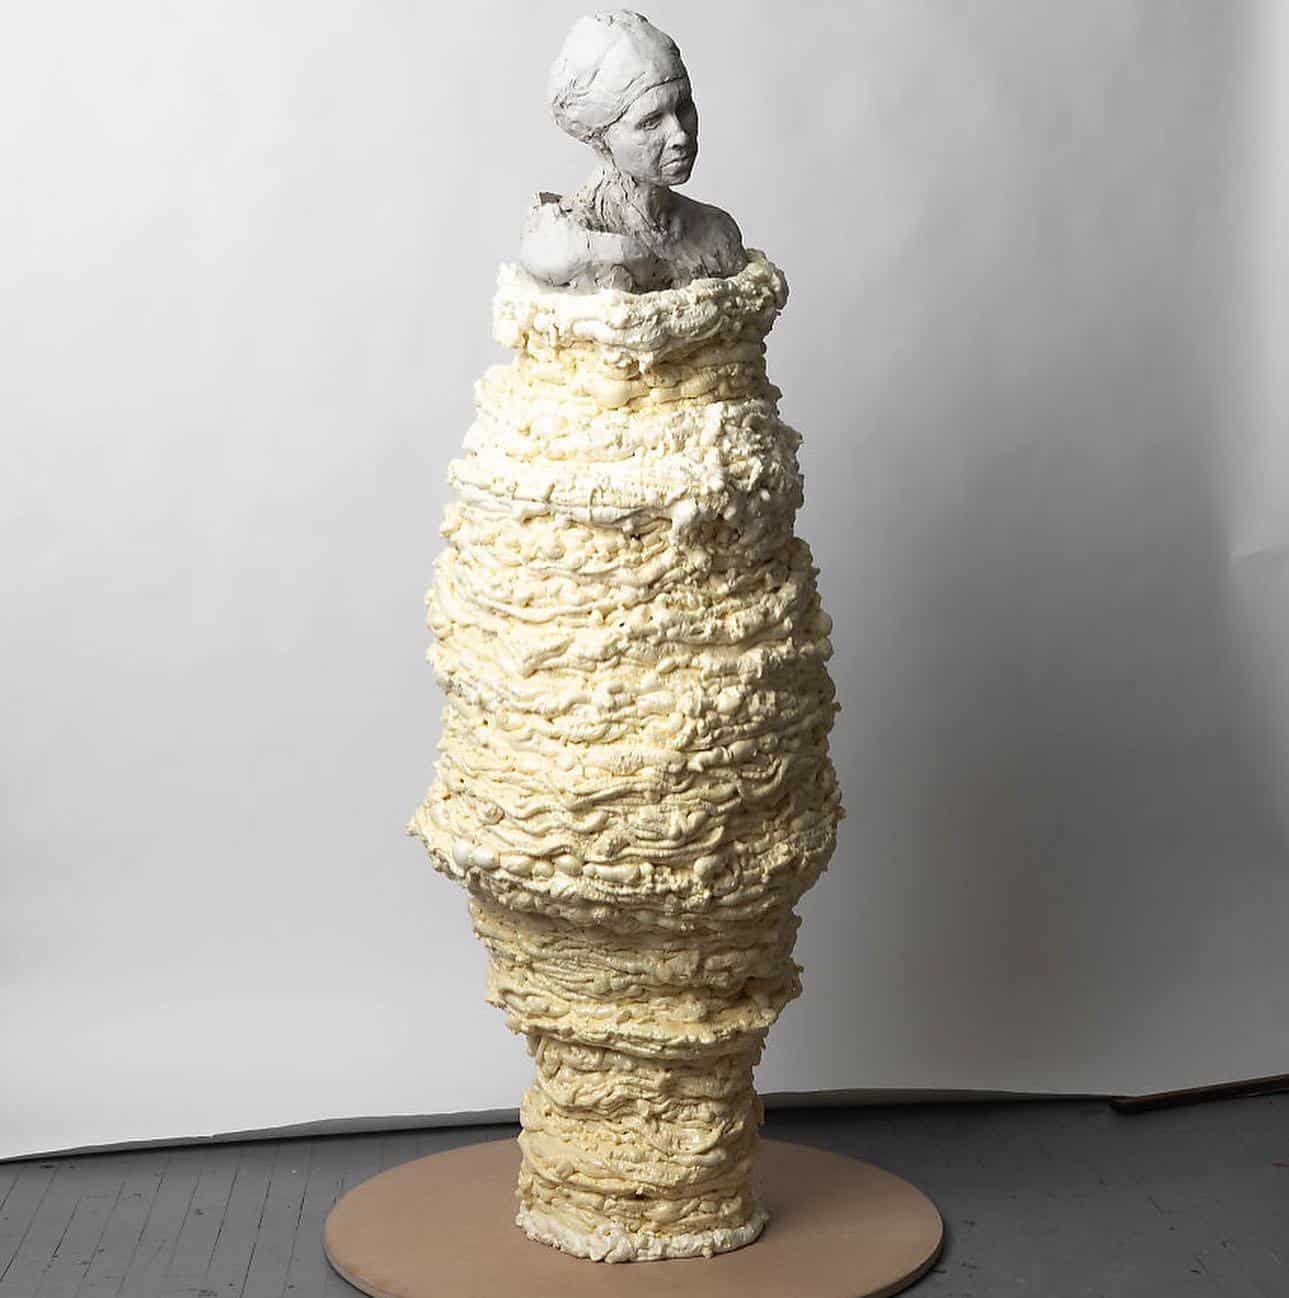 Abbie Kundishora, Stand, 2020. Polyurethane foam and clay, 6' x 2' x 2'.